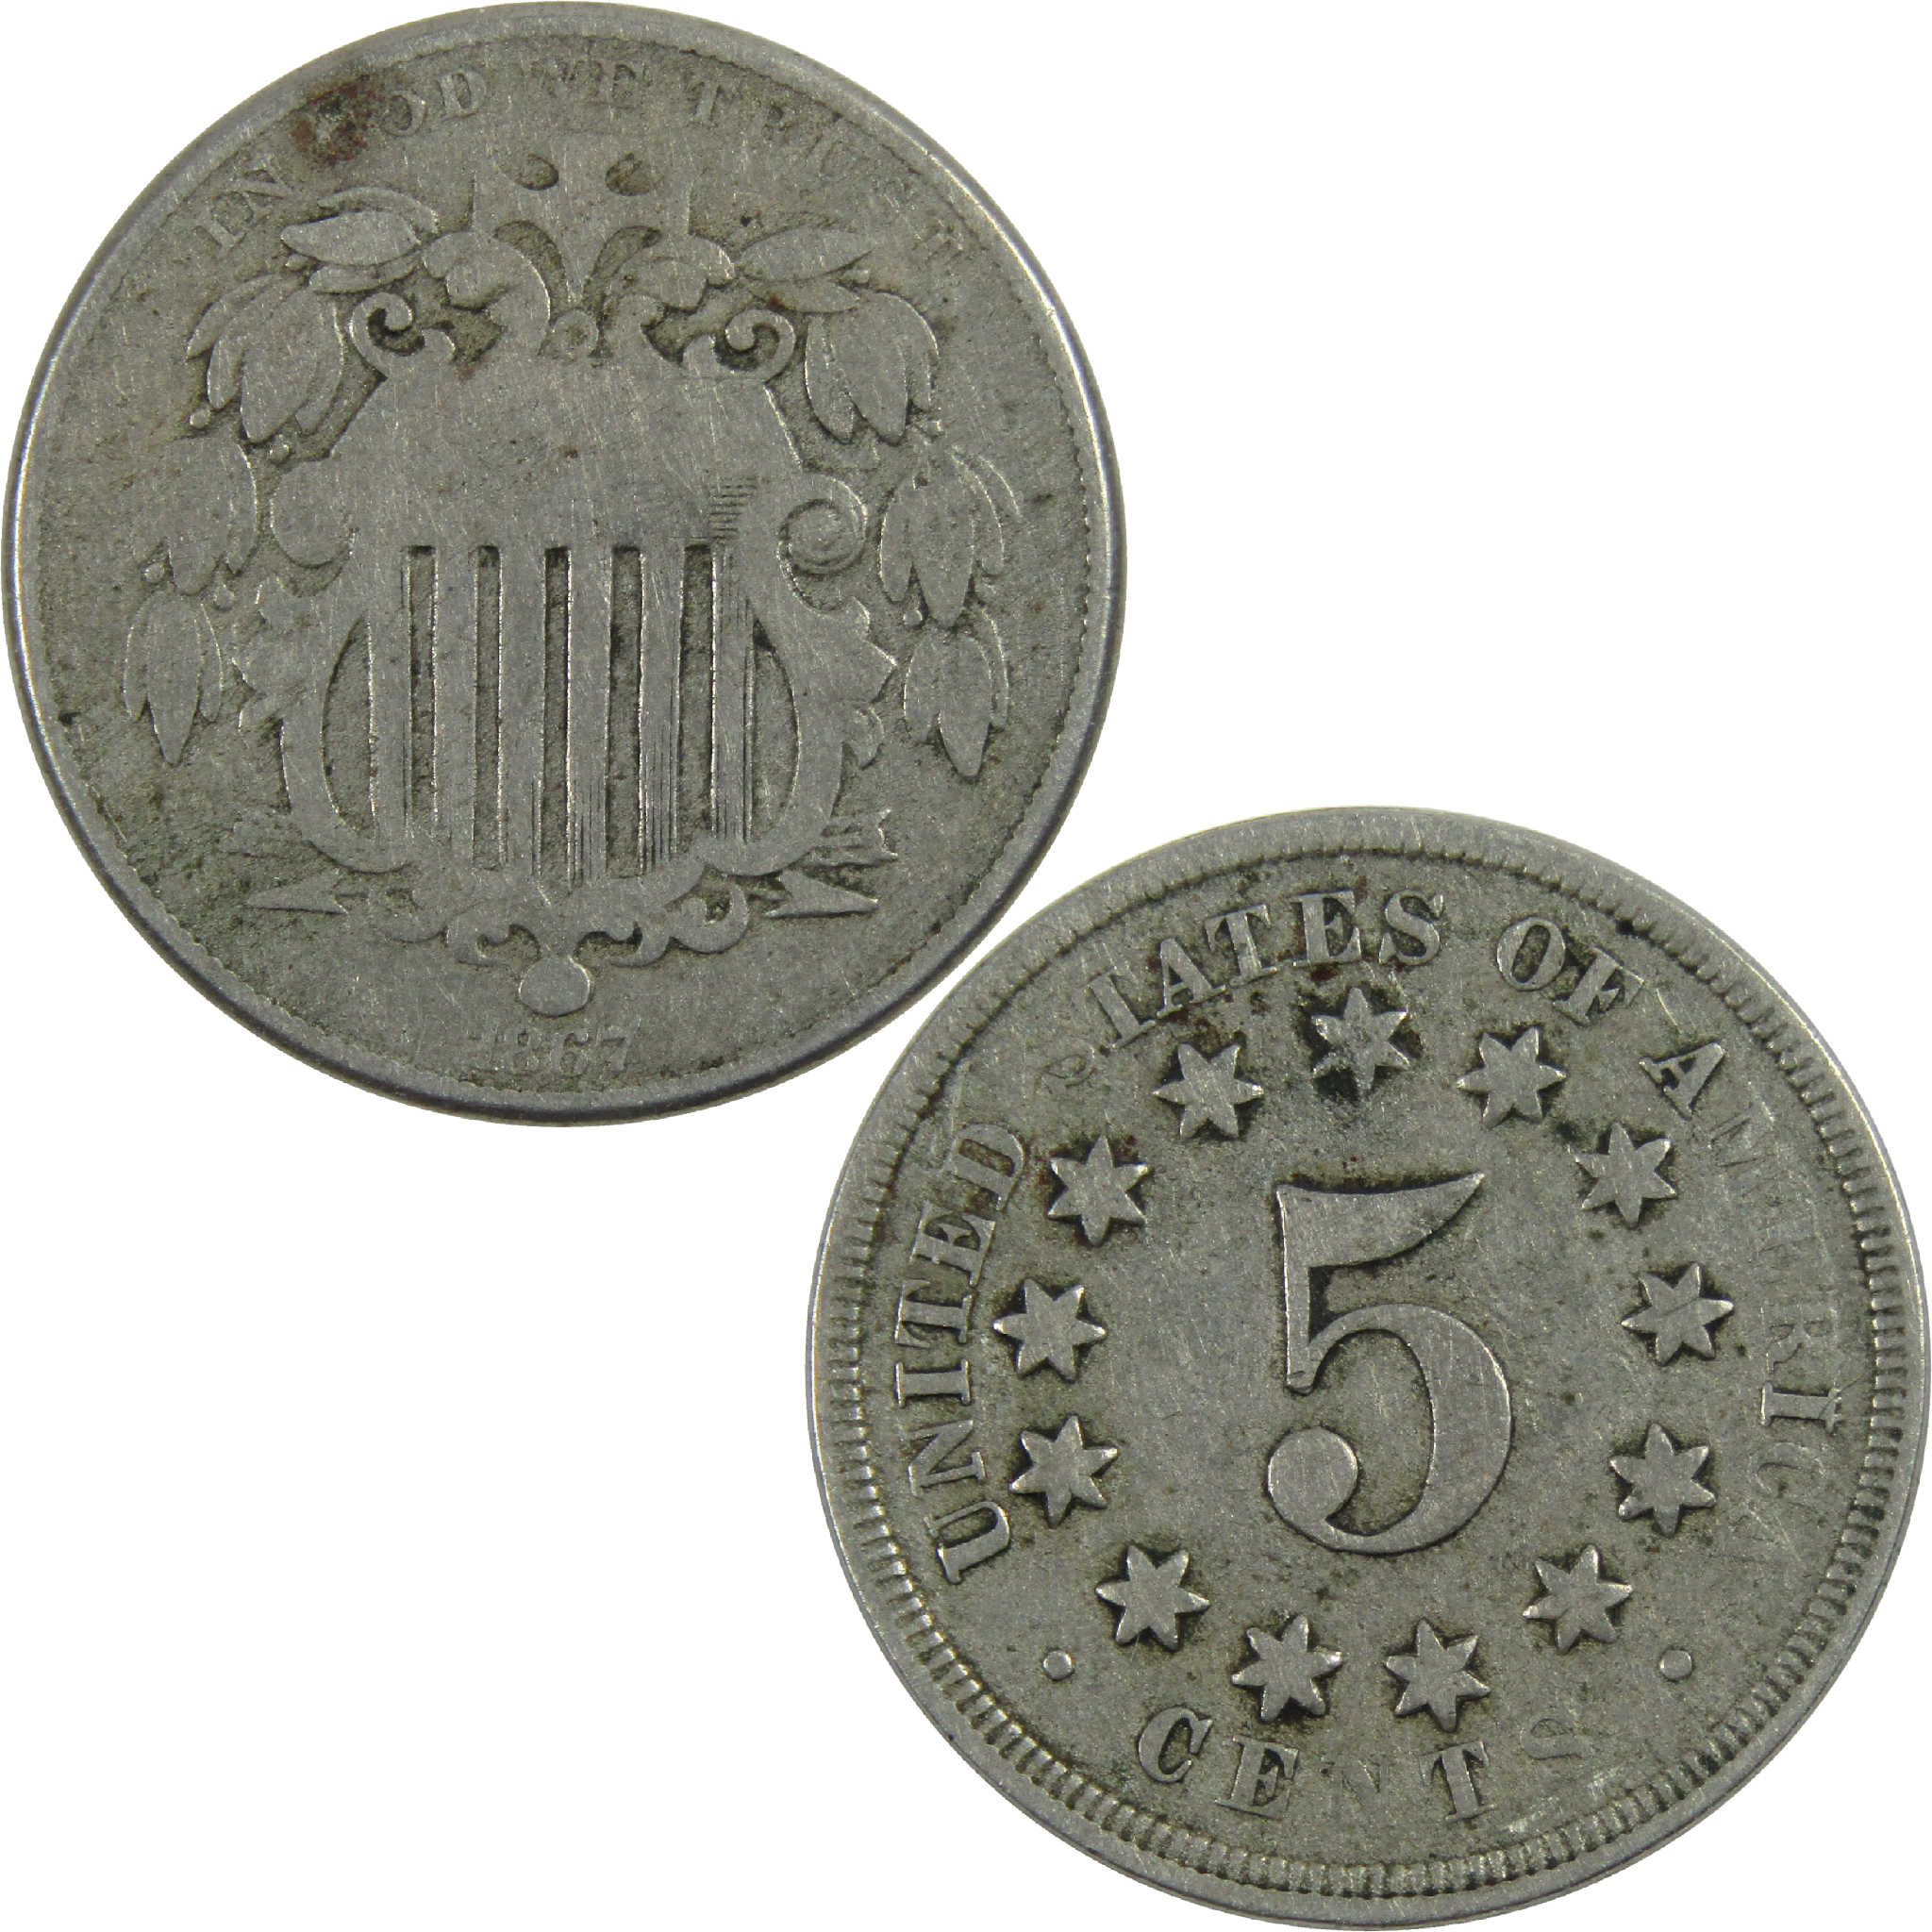 1867 No Rays Shield Nickel VG Very Good Details 5c Coin SKU:I12253